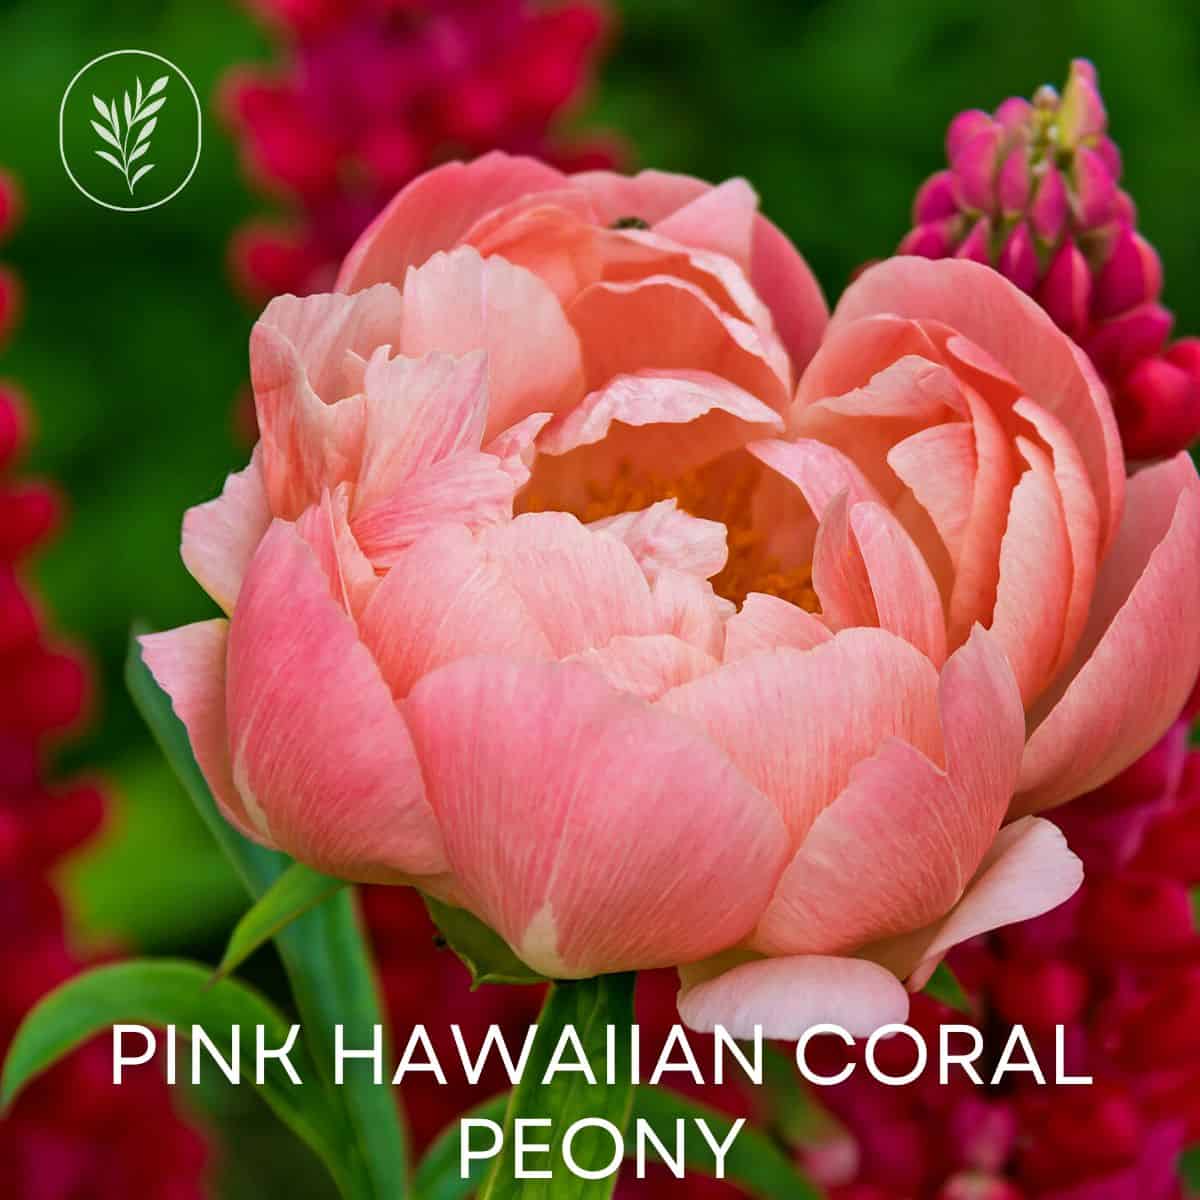 Pink hawaiian coral peony via @home4theharvest